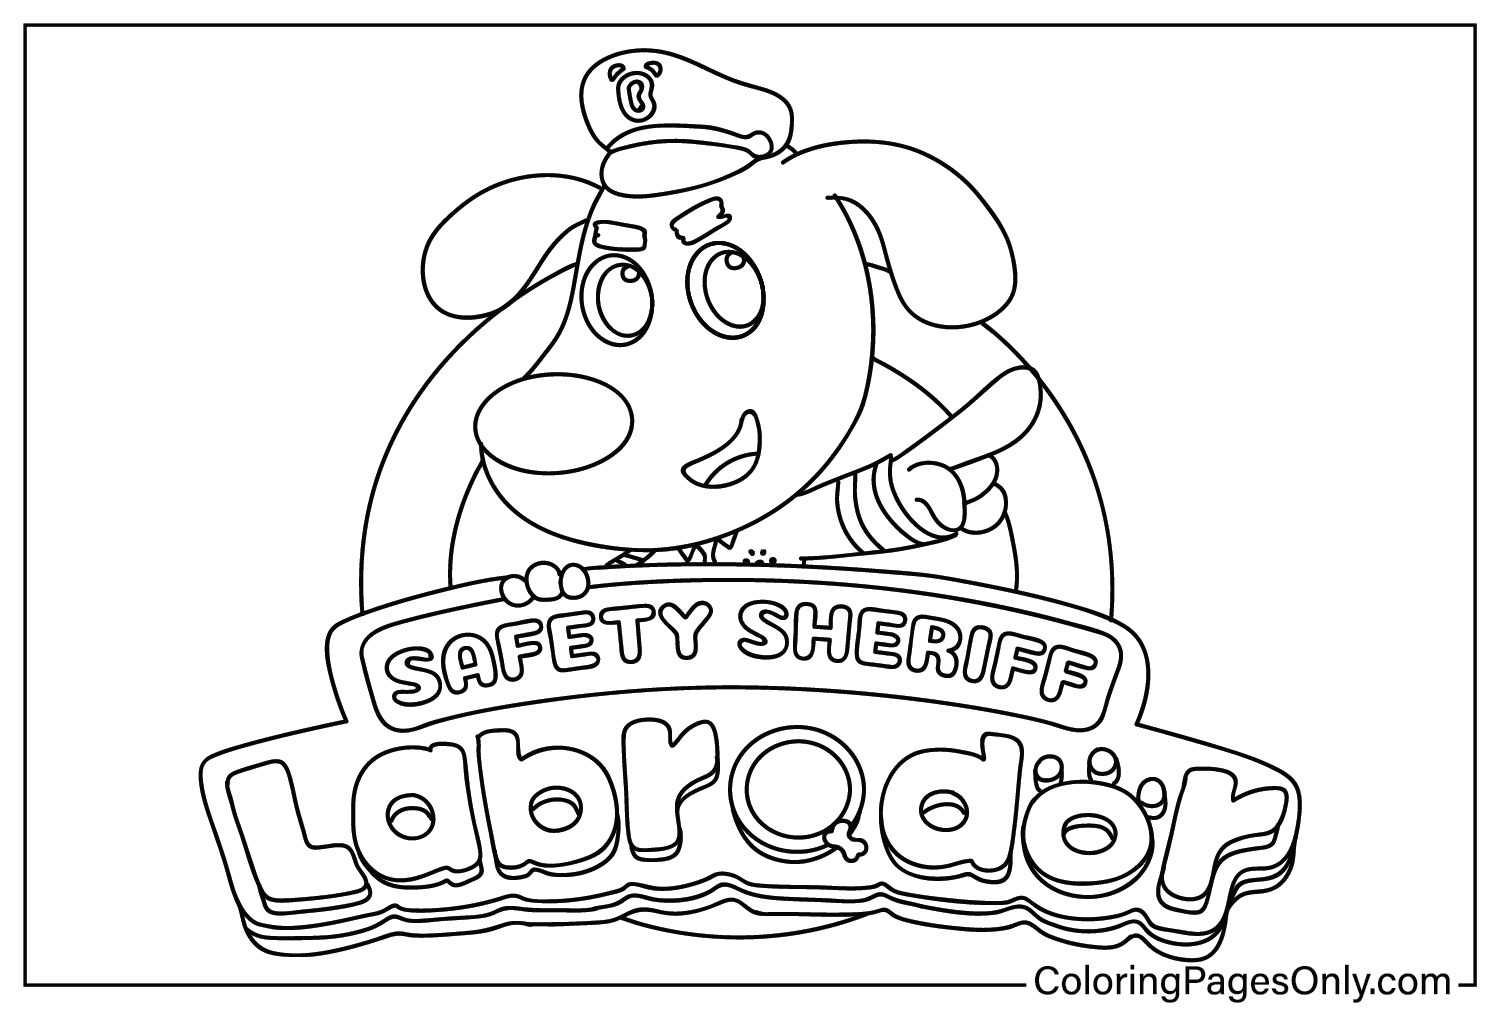 Safety Sheriff Labrador Afbeeldingen om in te kleuren van Safety Sheriff Labrador